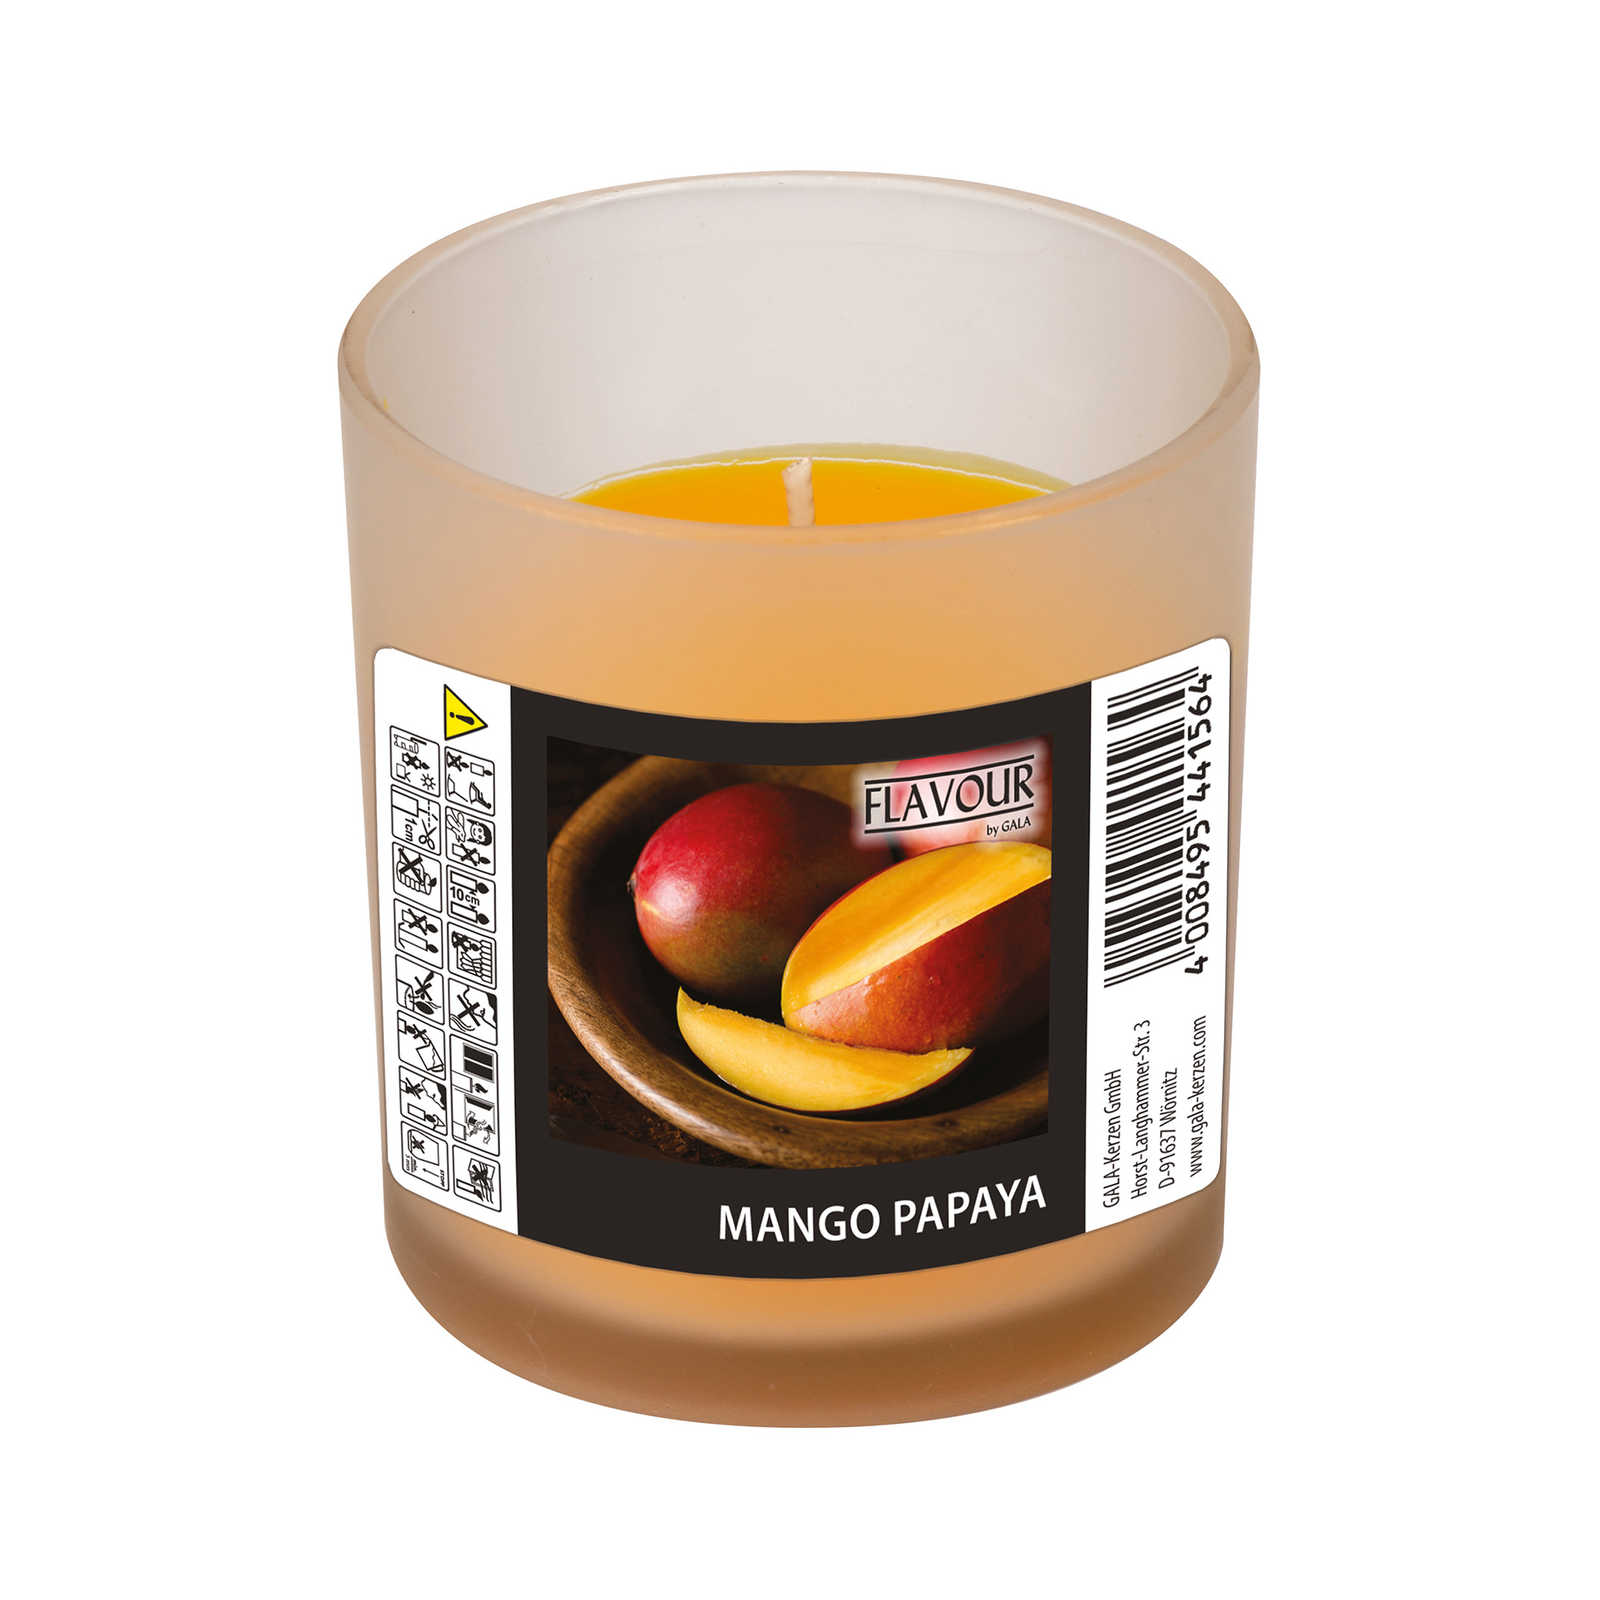         Mango Papaya Scented Candle with Fruity Fragrance - 110g
    